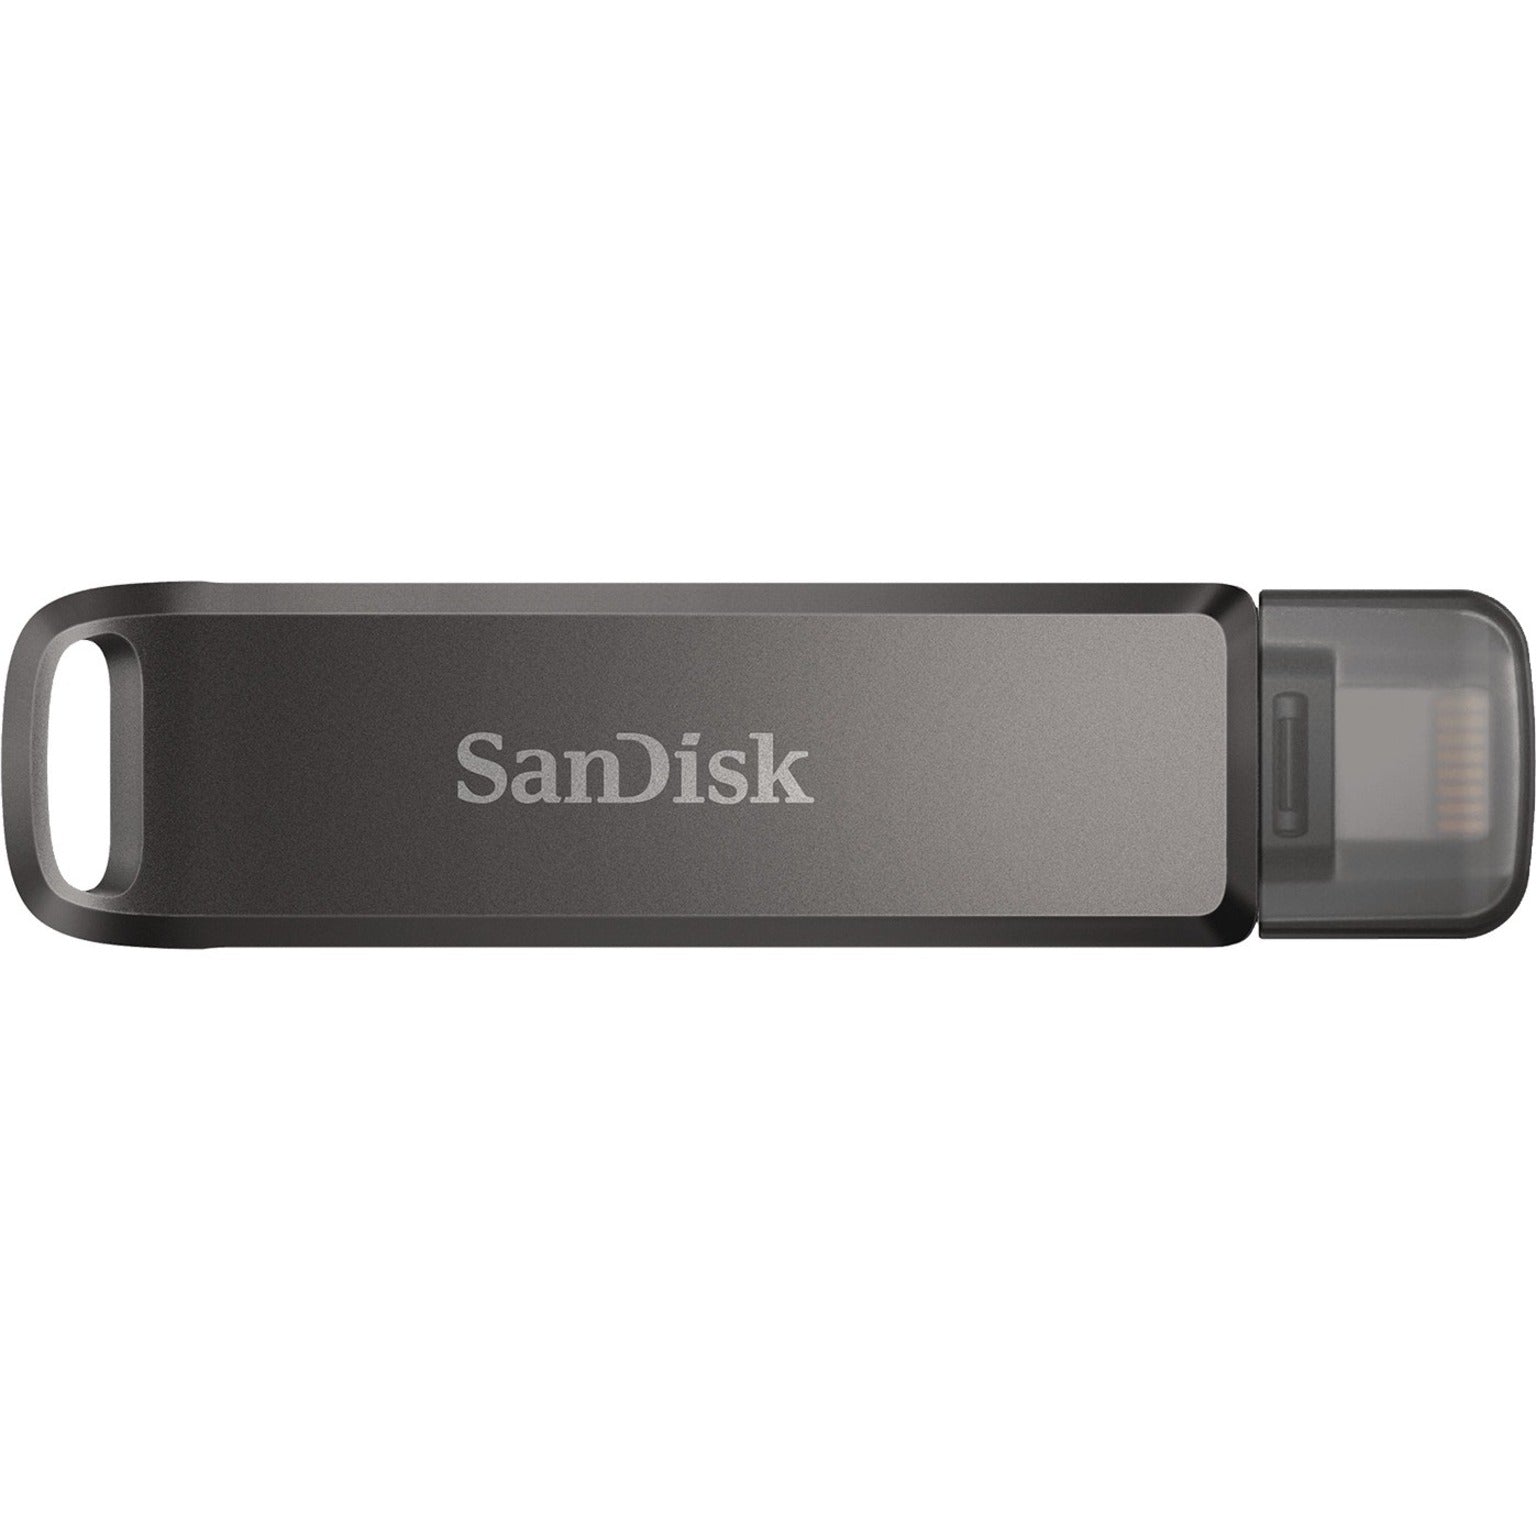 SanDisk SDIX70N-256G-AN6NE iXpand Flash Drive Luxe, 256GB, Swivel Design